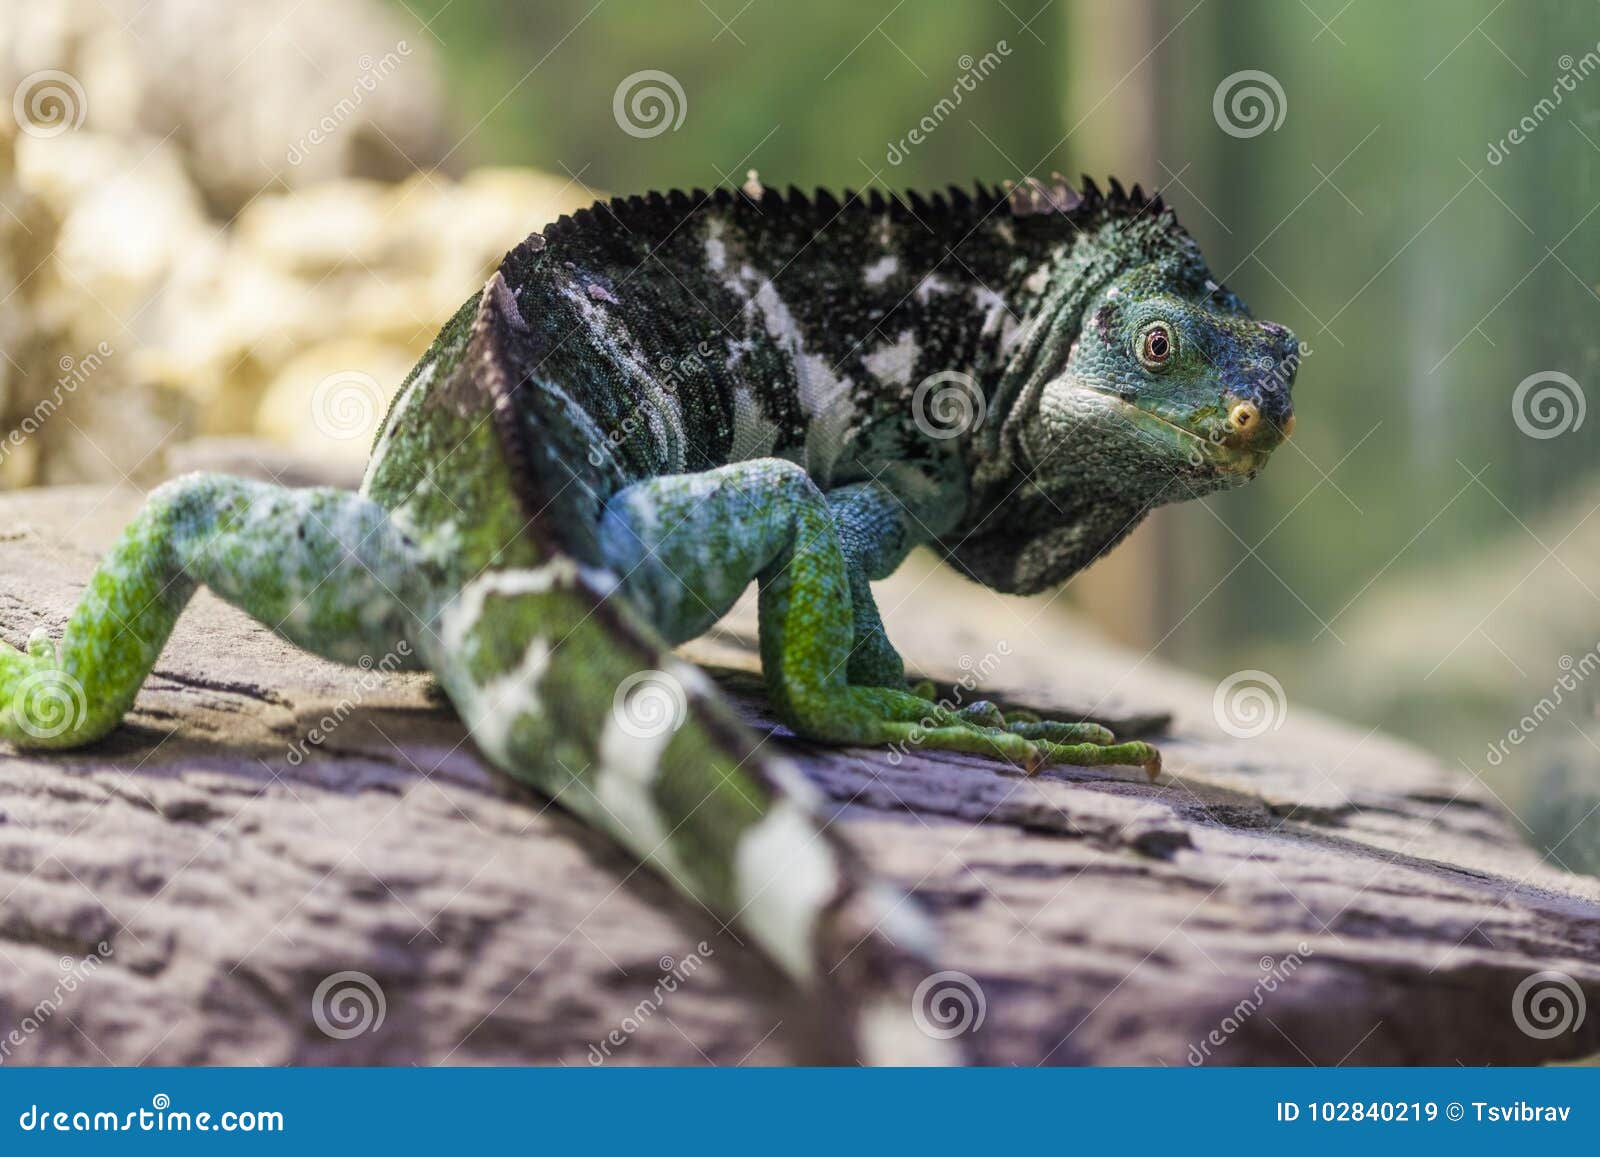 fiji island crested iguana - critically endangered species.